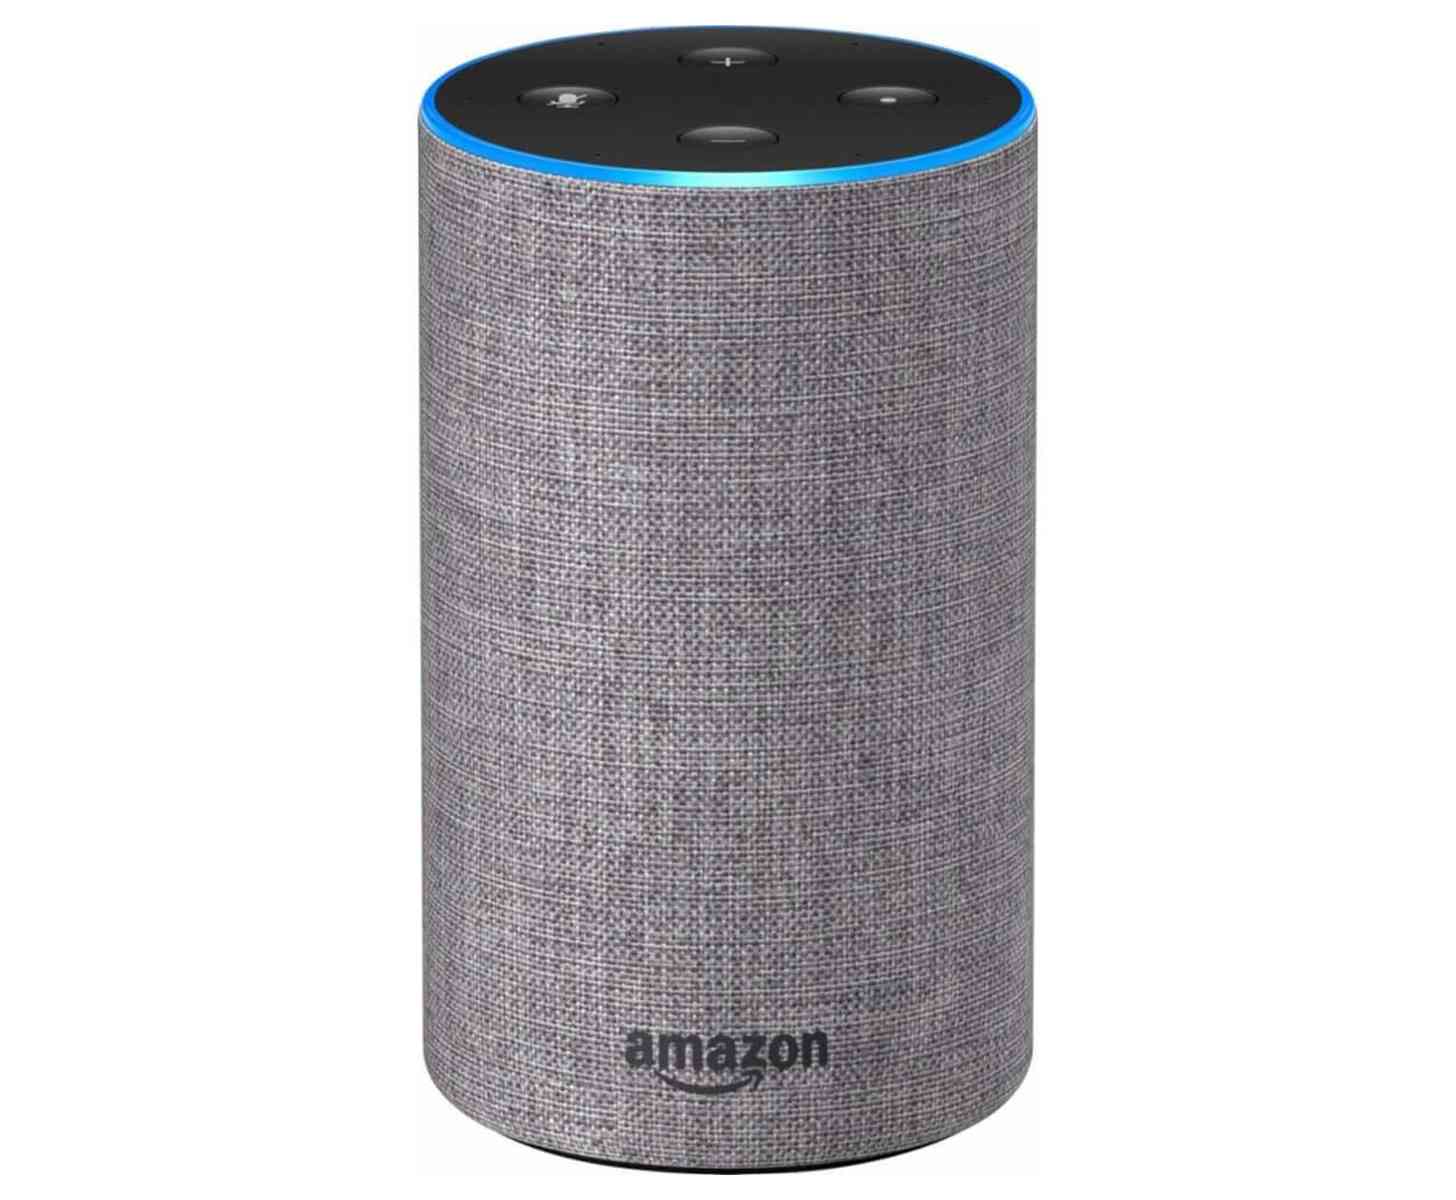 Amazon Echo gray